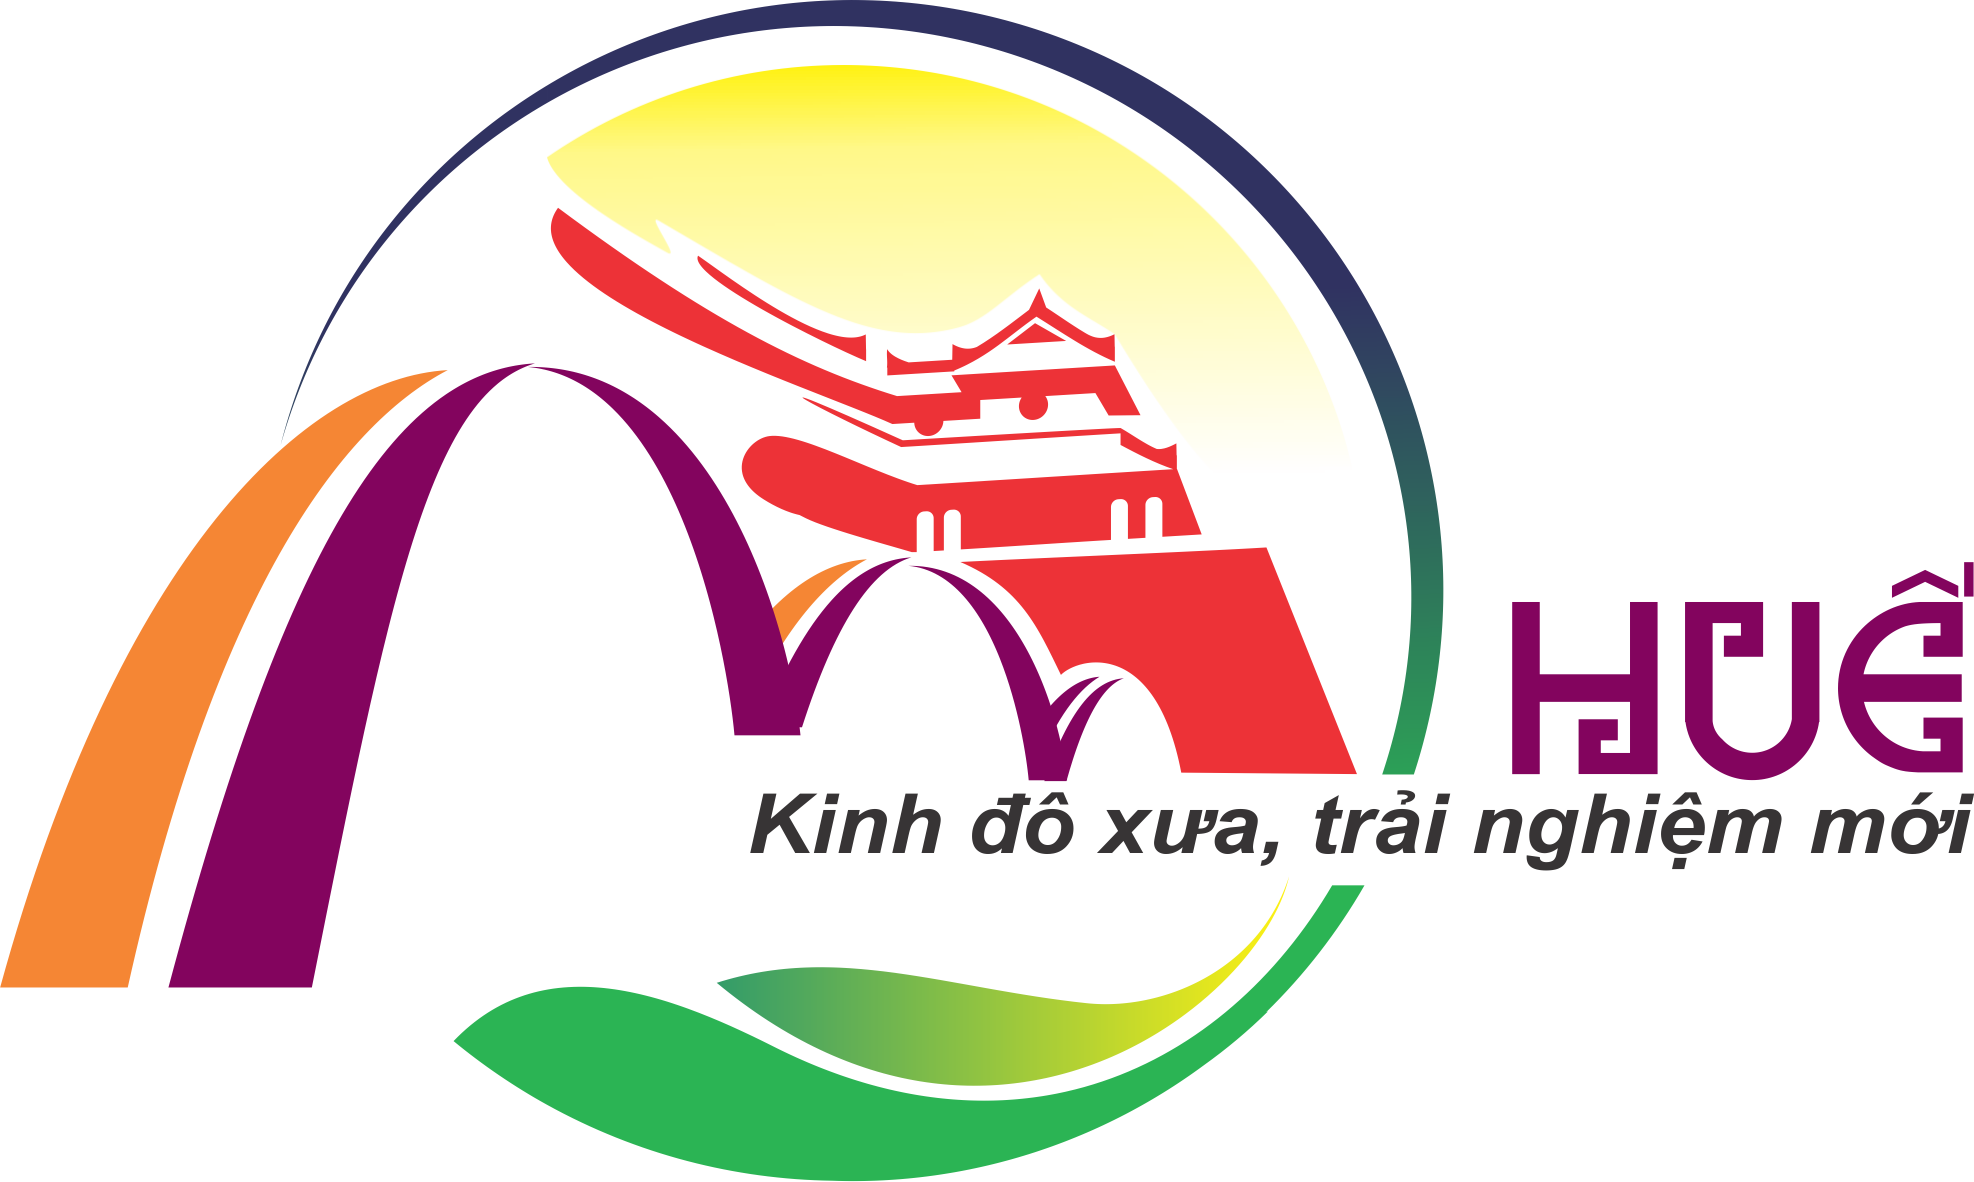 Hue Tourism Information and Promotion Center